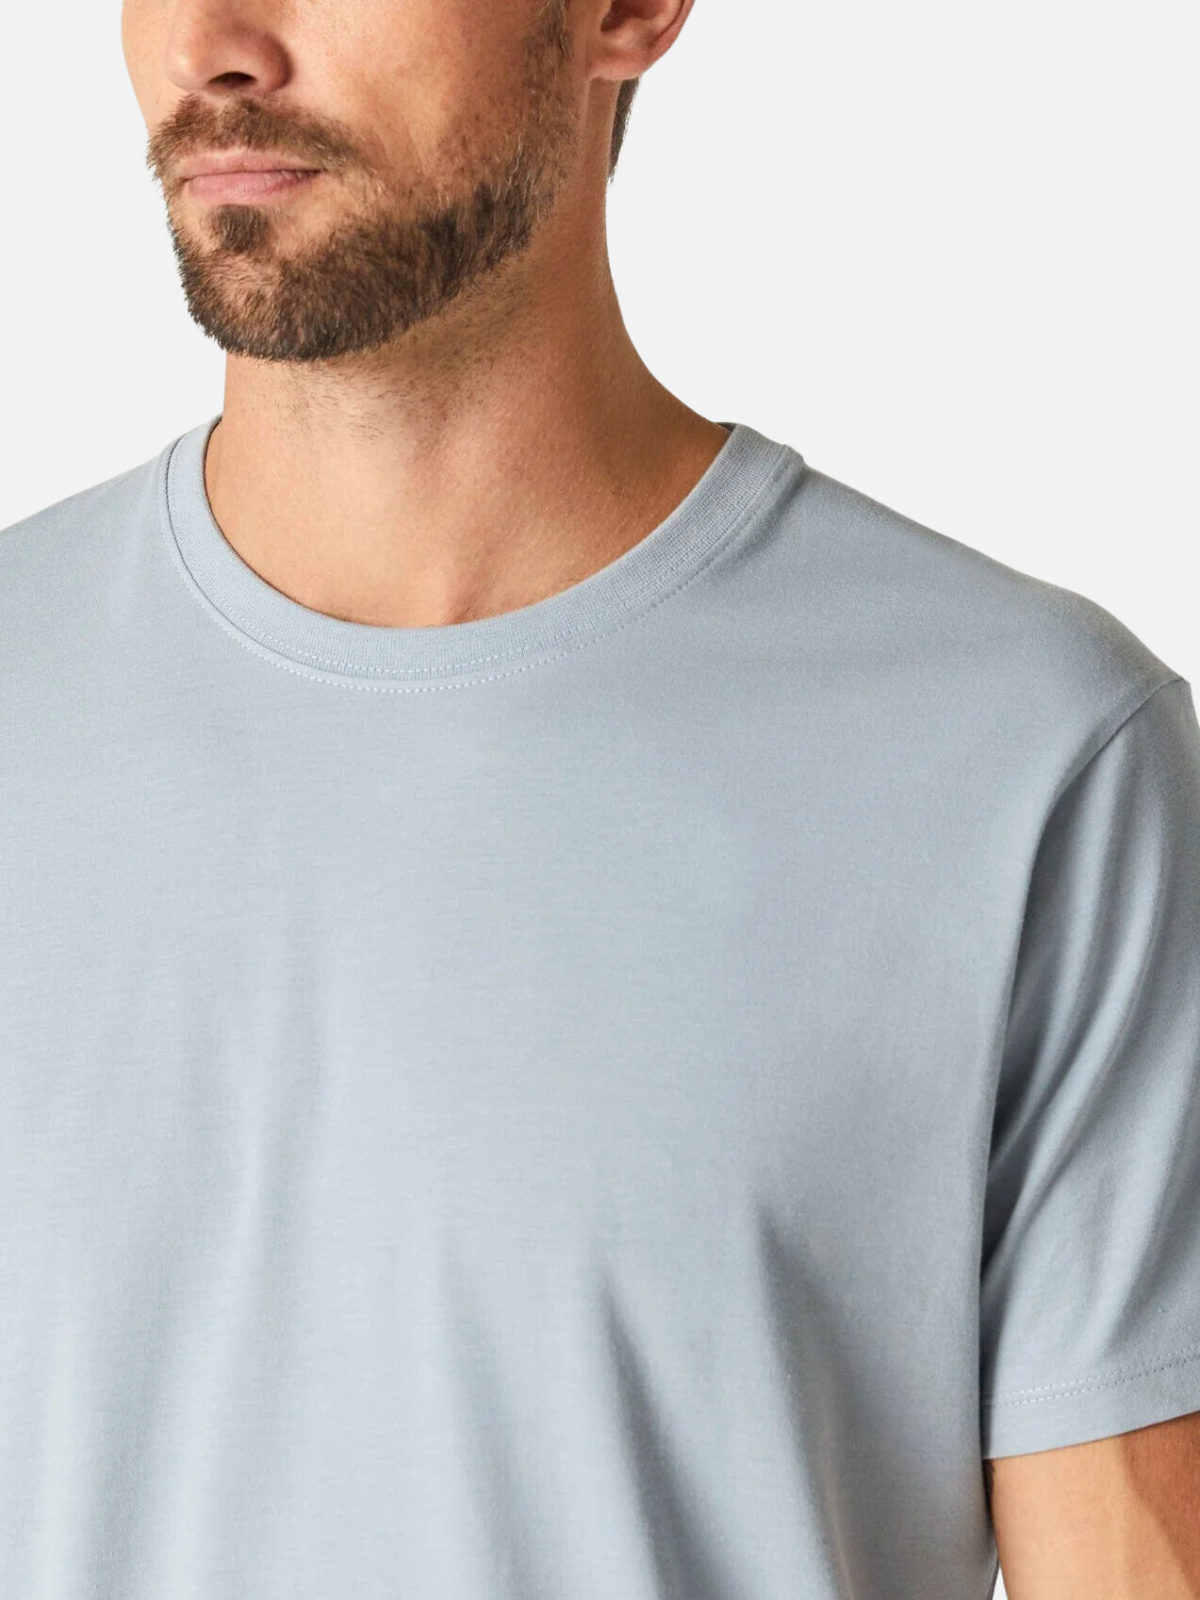 mavi crew neck tee basic t-shirt sustainability biodegradable materials cotton elastane modal kempt athens ga georgia men's clothing store